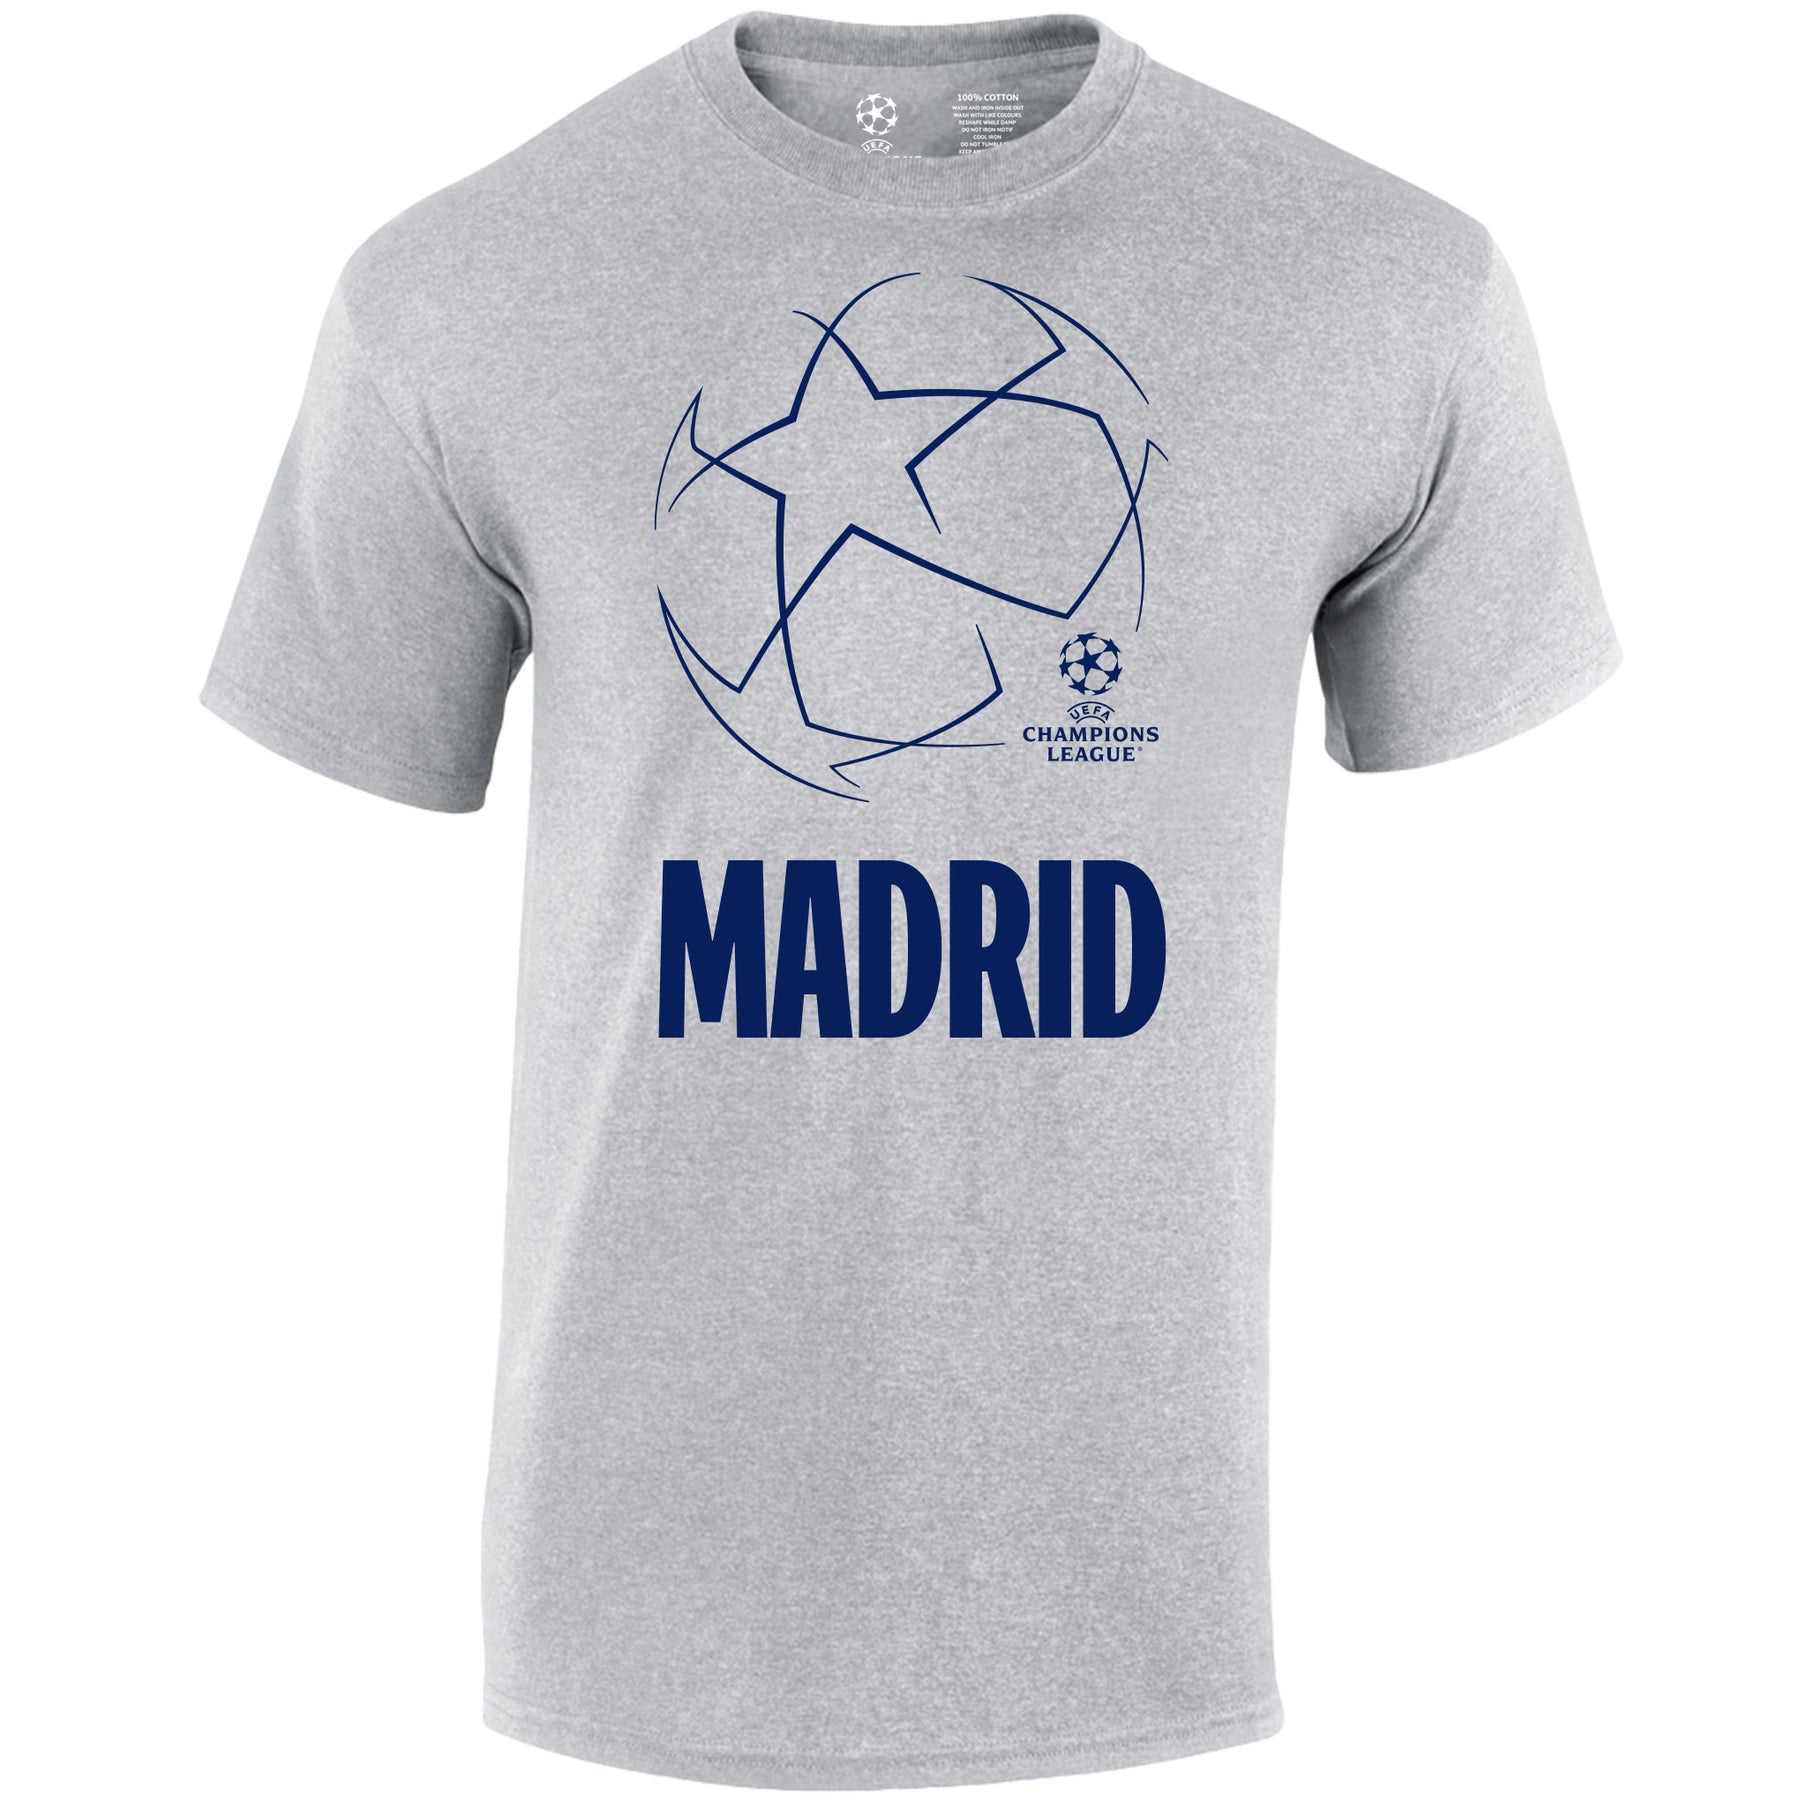 Champions League Starball Madrid City T-Shirt Grey